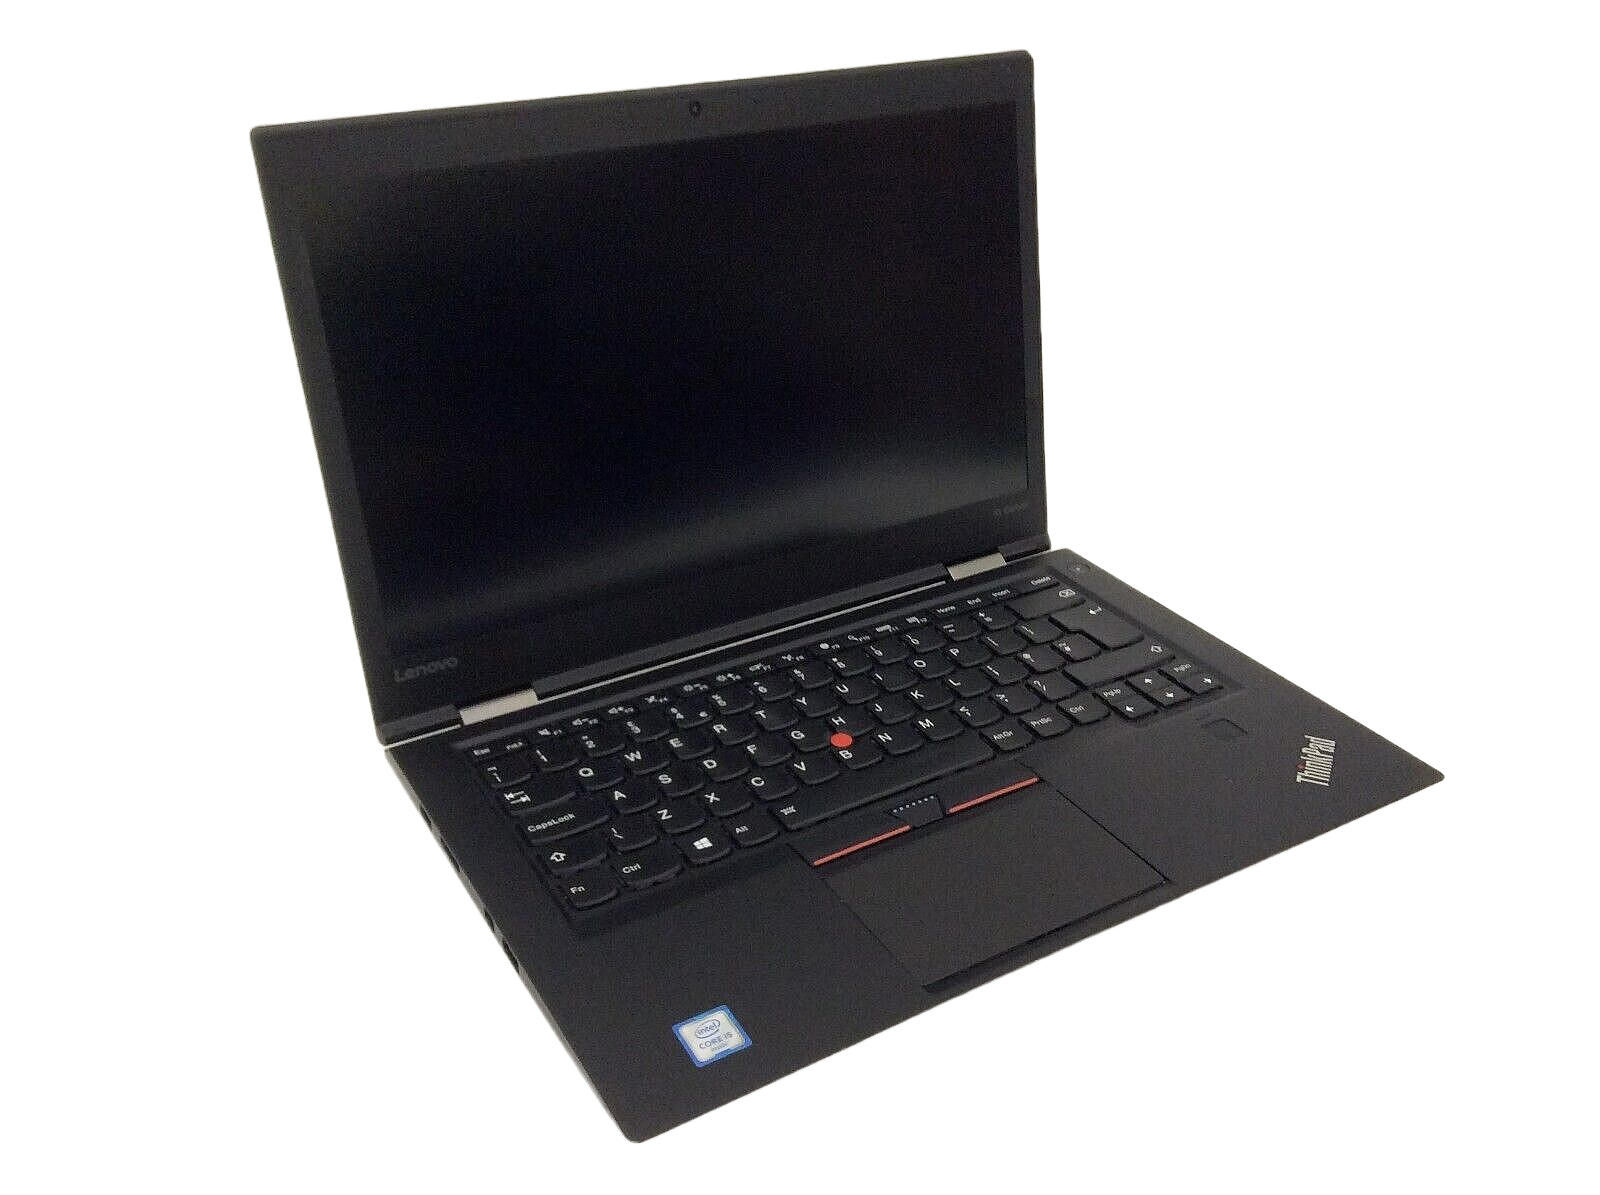 Lenovo ThinkPad X1 Carbon 20HQ-S1H100 Core i5 7200U 2.50GHz/8GB/256GB(NVMe)  〔0614N32〕 - パソコン